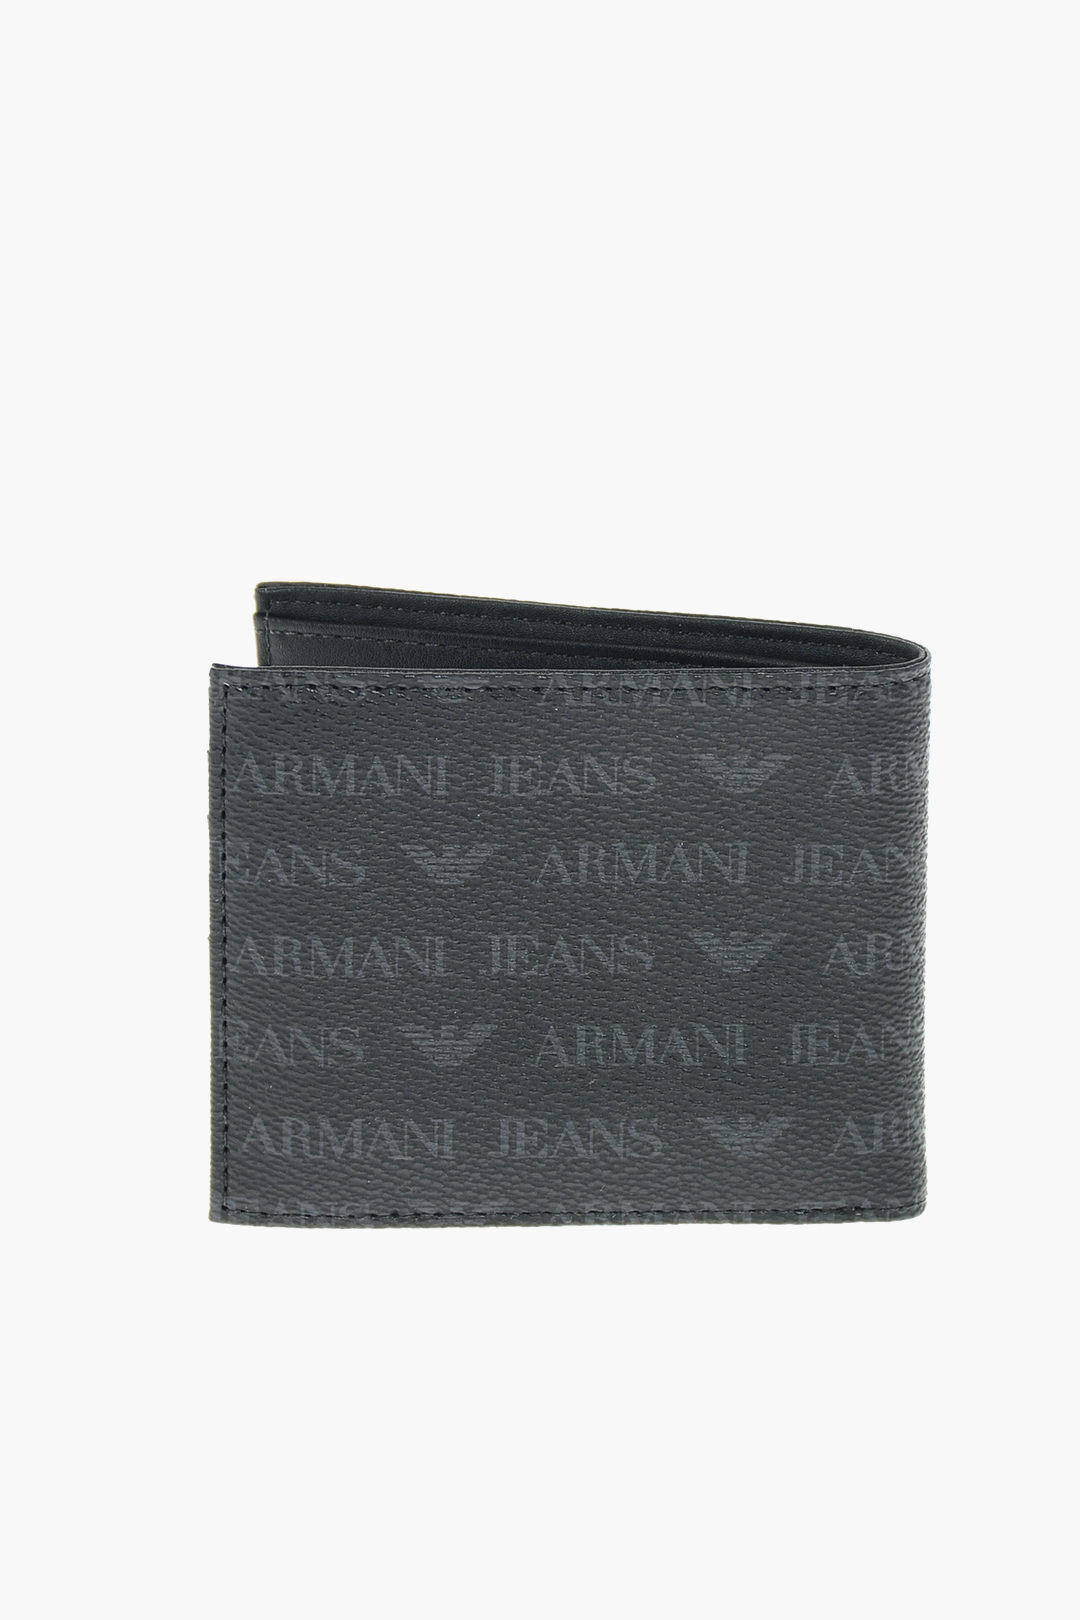 Armani Jeans Womens Black Metal Logo Purse | Hurleys